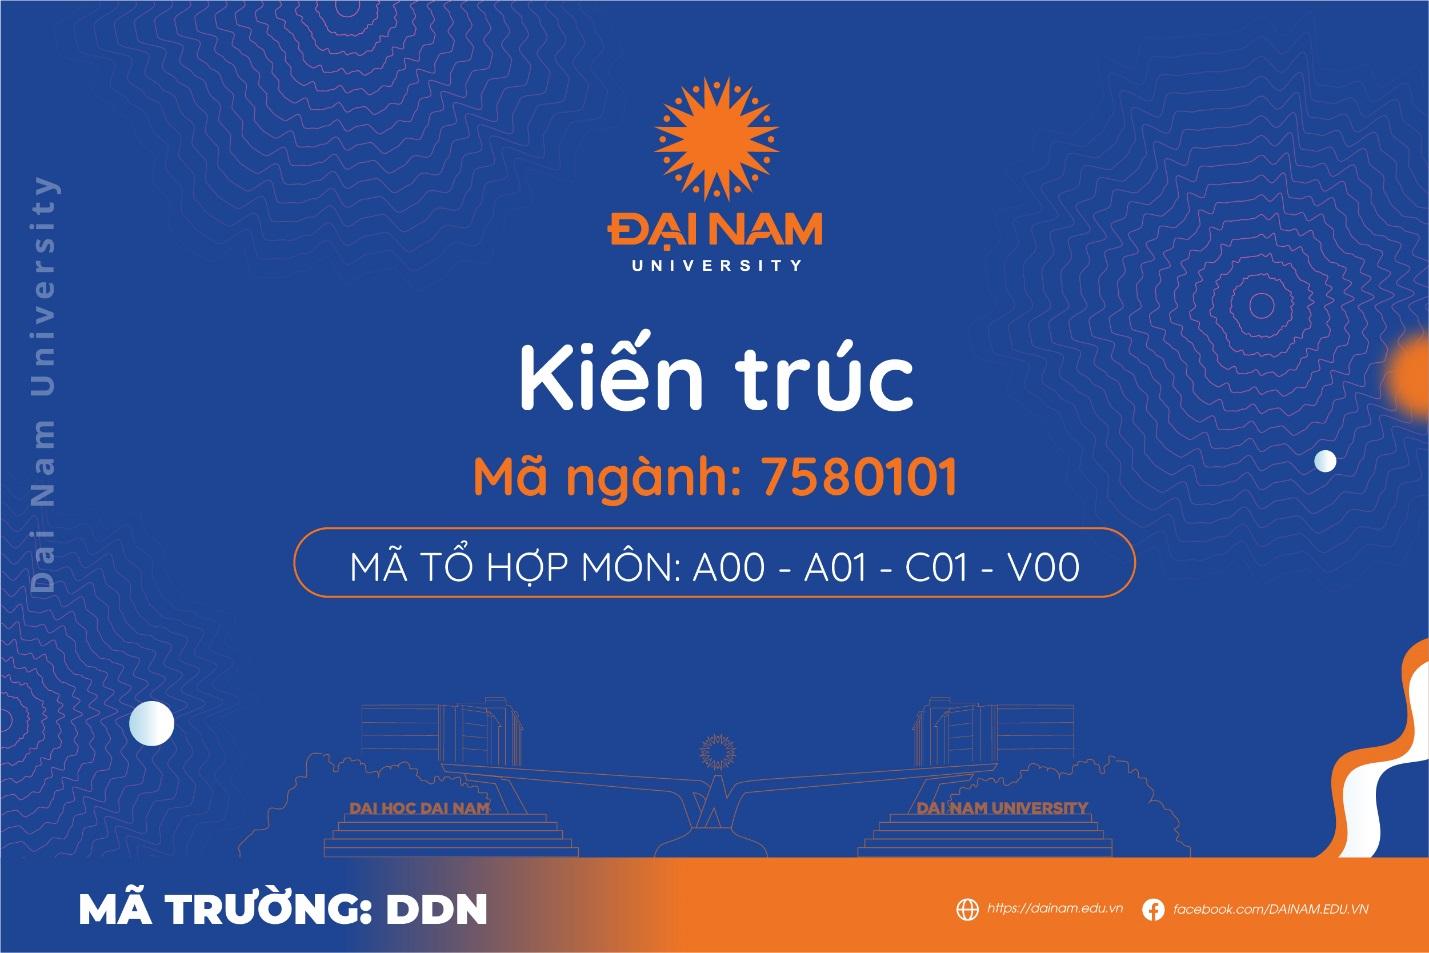 cac-phuong-thuc-xet-tuyen-vao-nganh-kien-truc-truong-dai-hoc-dai-nam